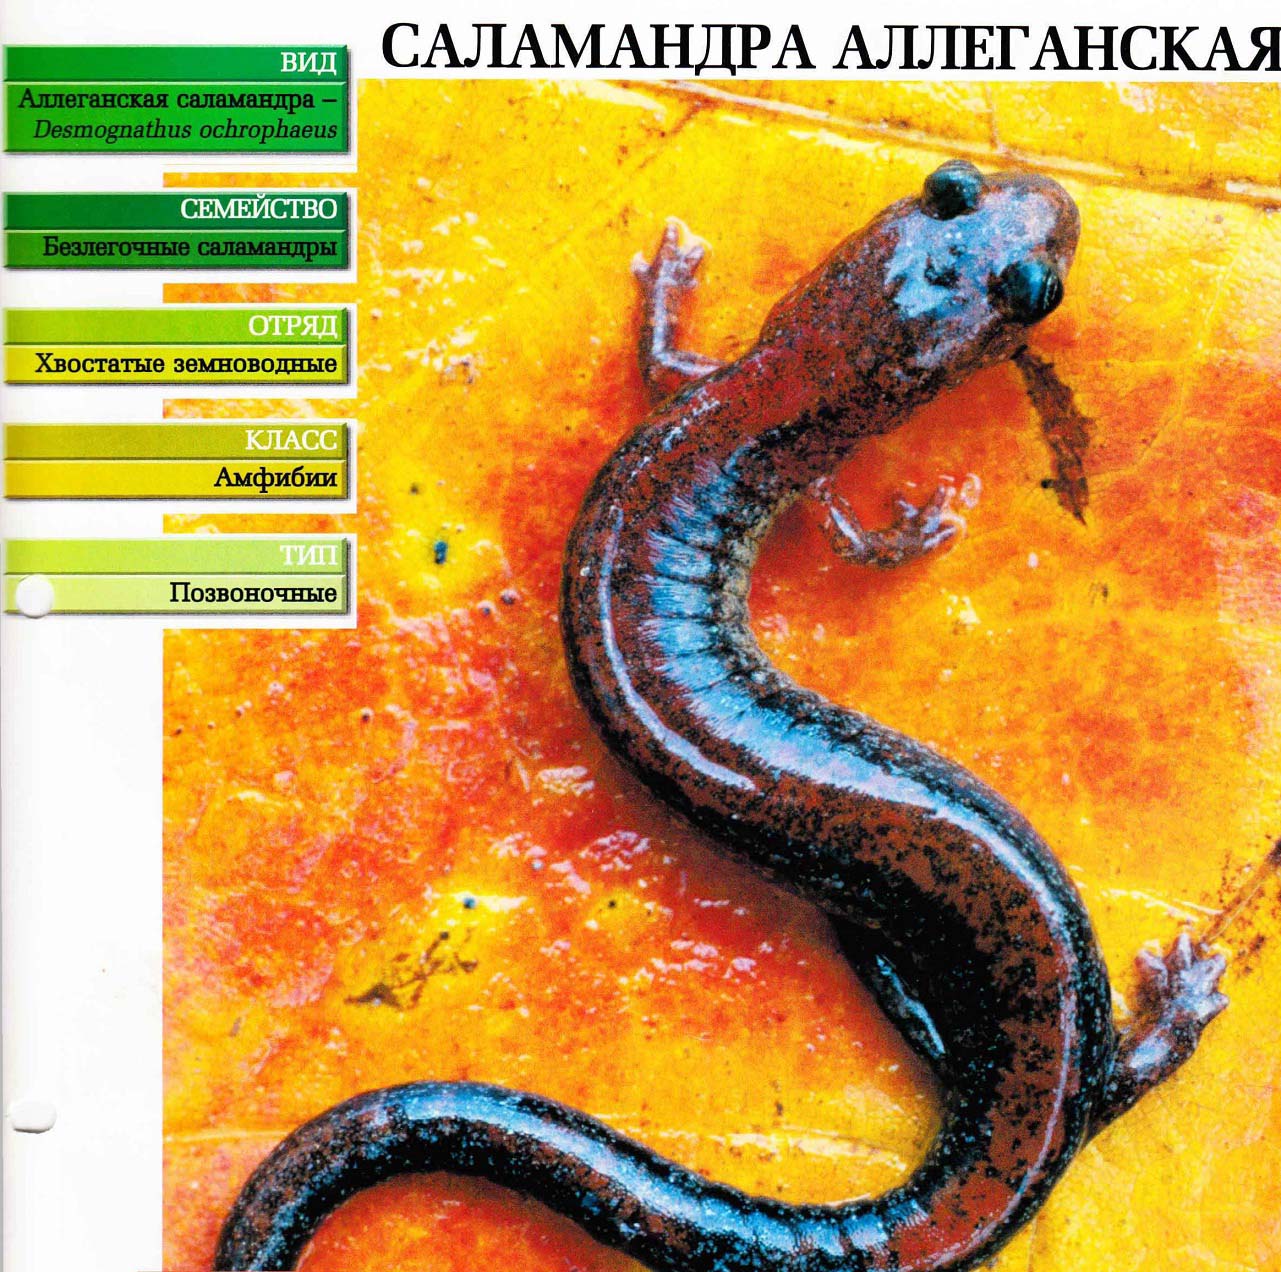 Систематика (научная классификация) саламандры аллеганской. Desmognathus ochrophaeus.